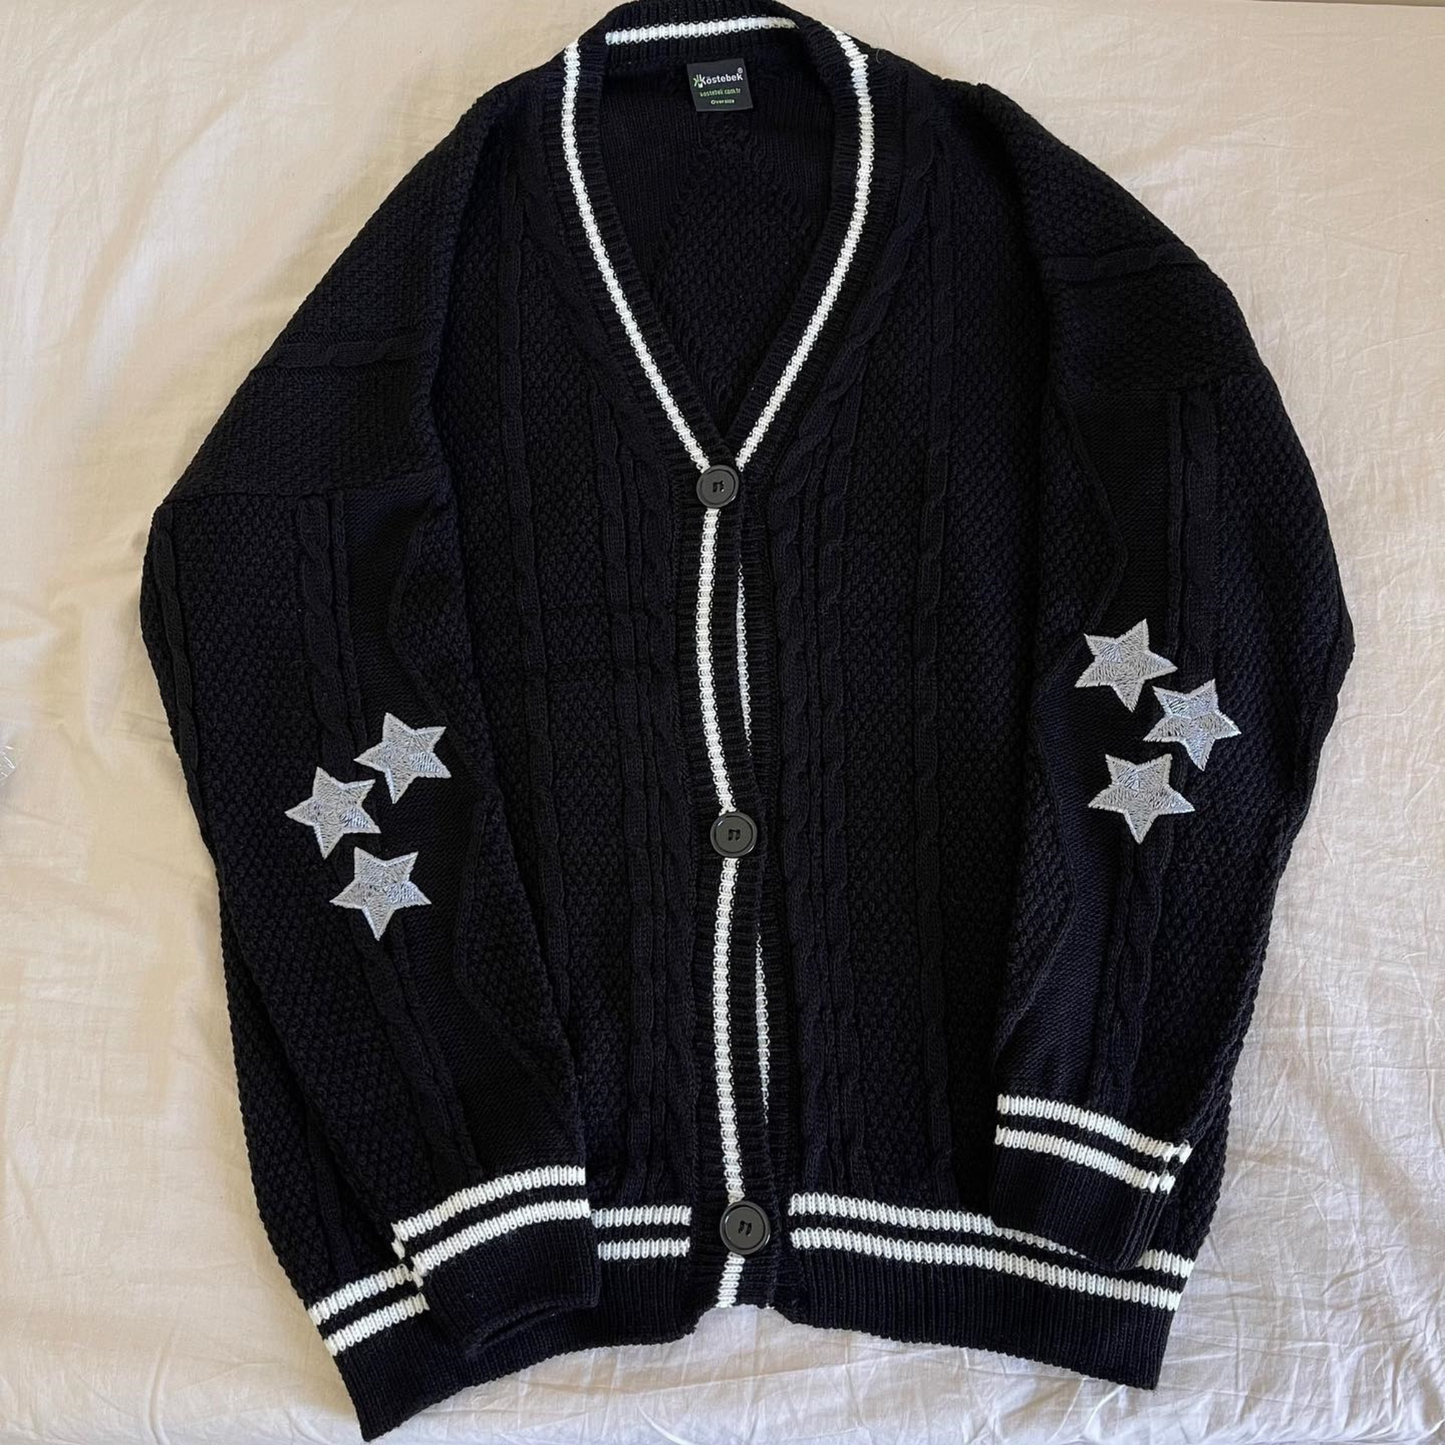 Black Reputation Taylors Version Cardigan, Eras Tour Outfit Sweater